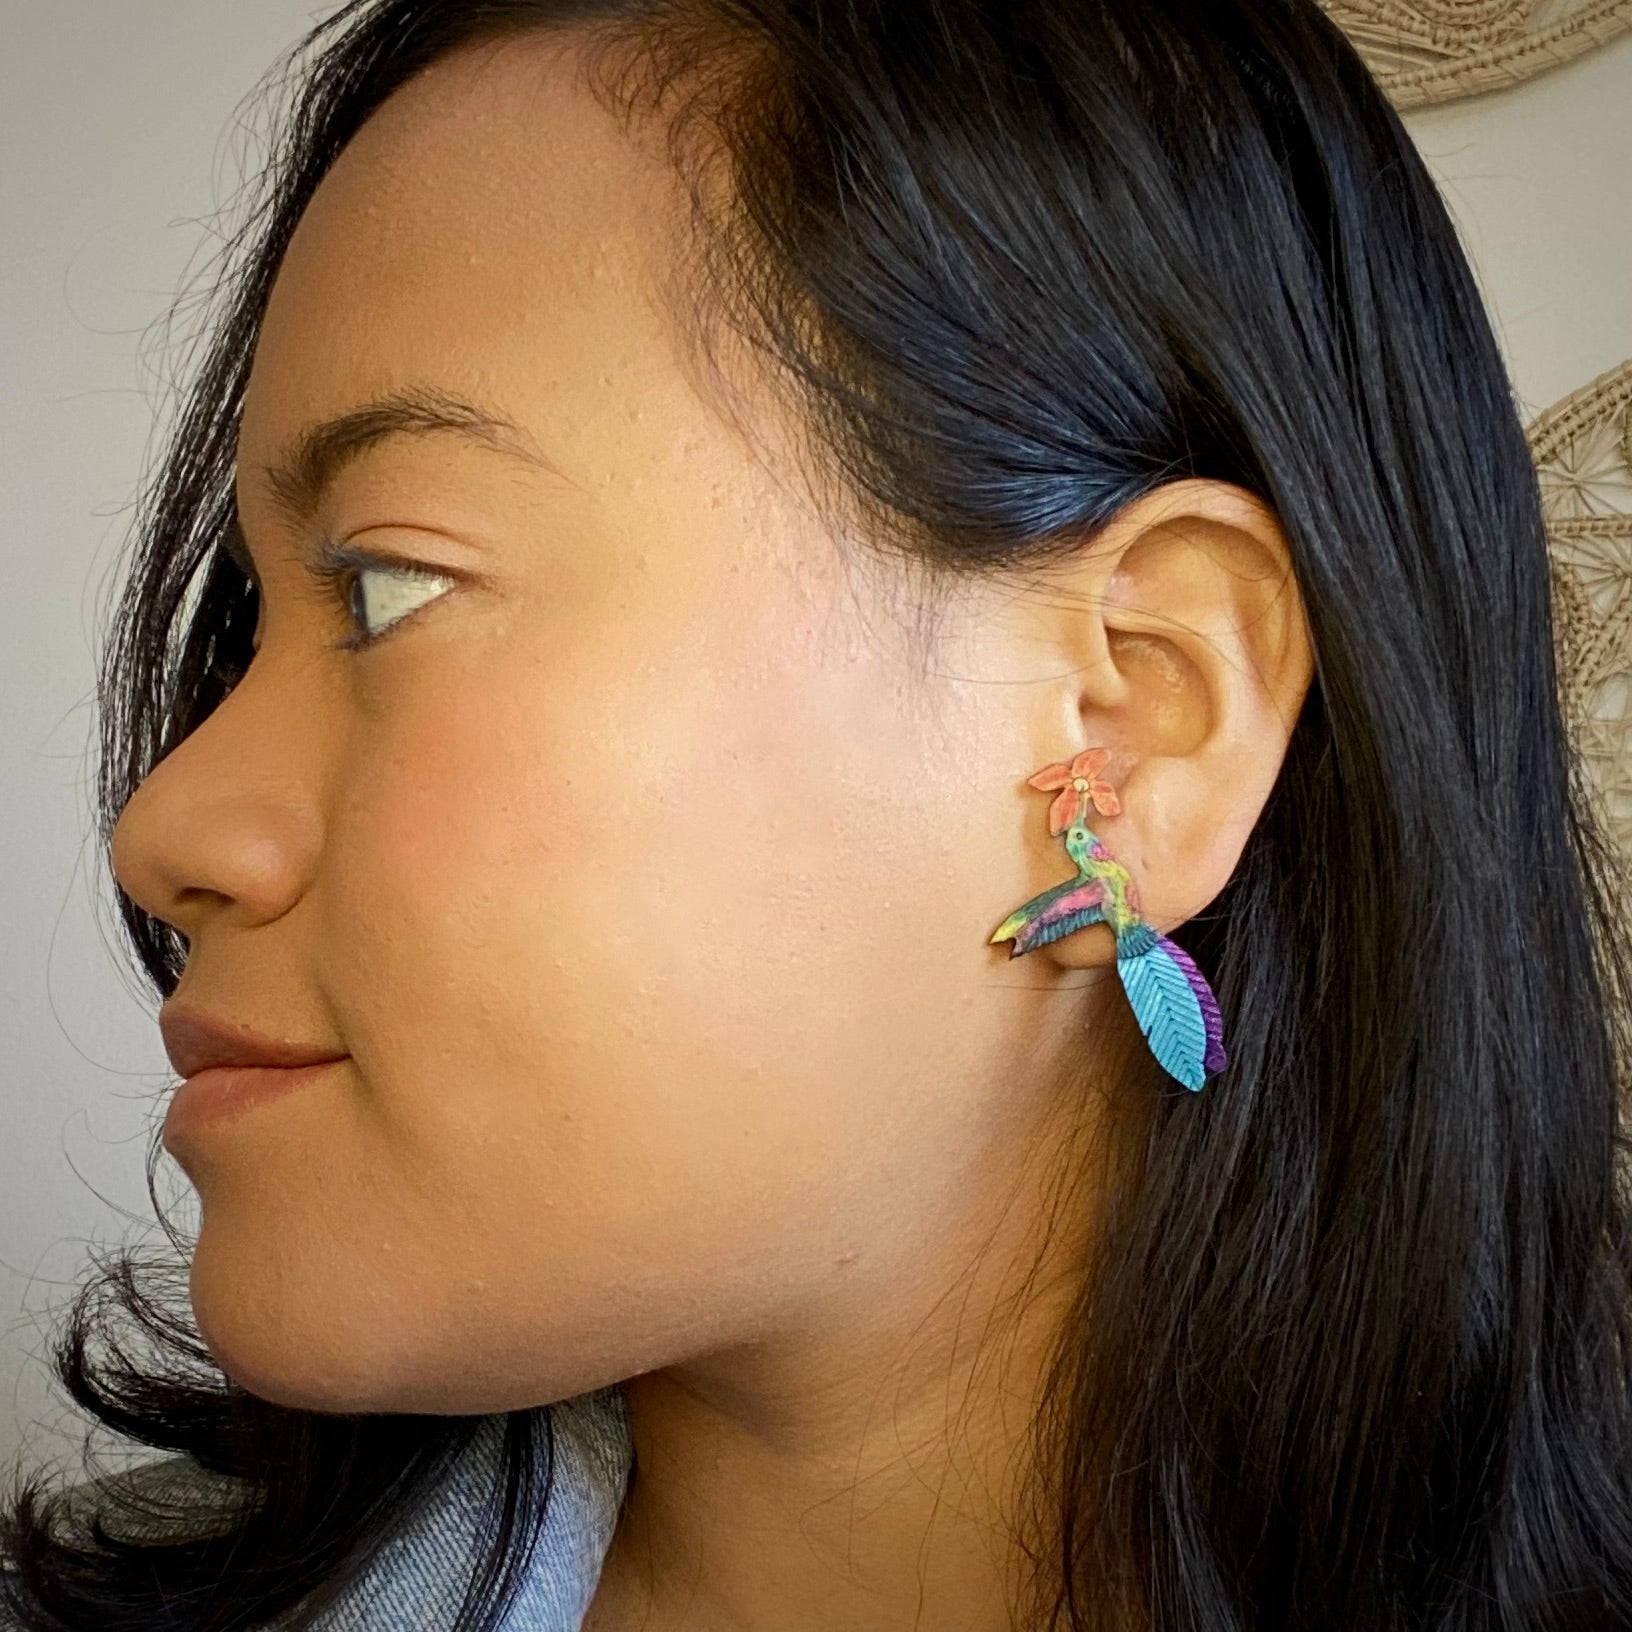 Sm Ruby Throated Hummingbird earrings posts.  Handmade in Colombia. 